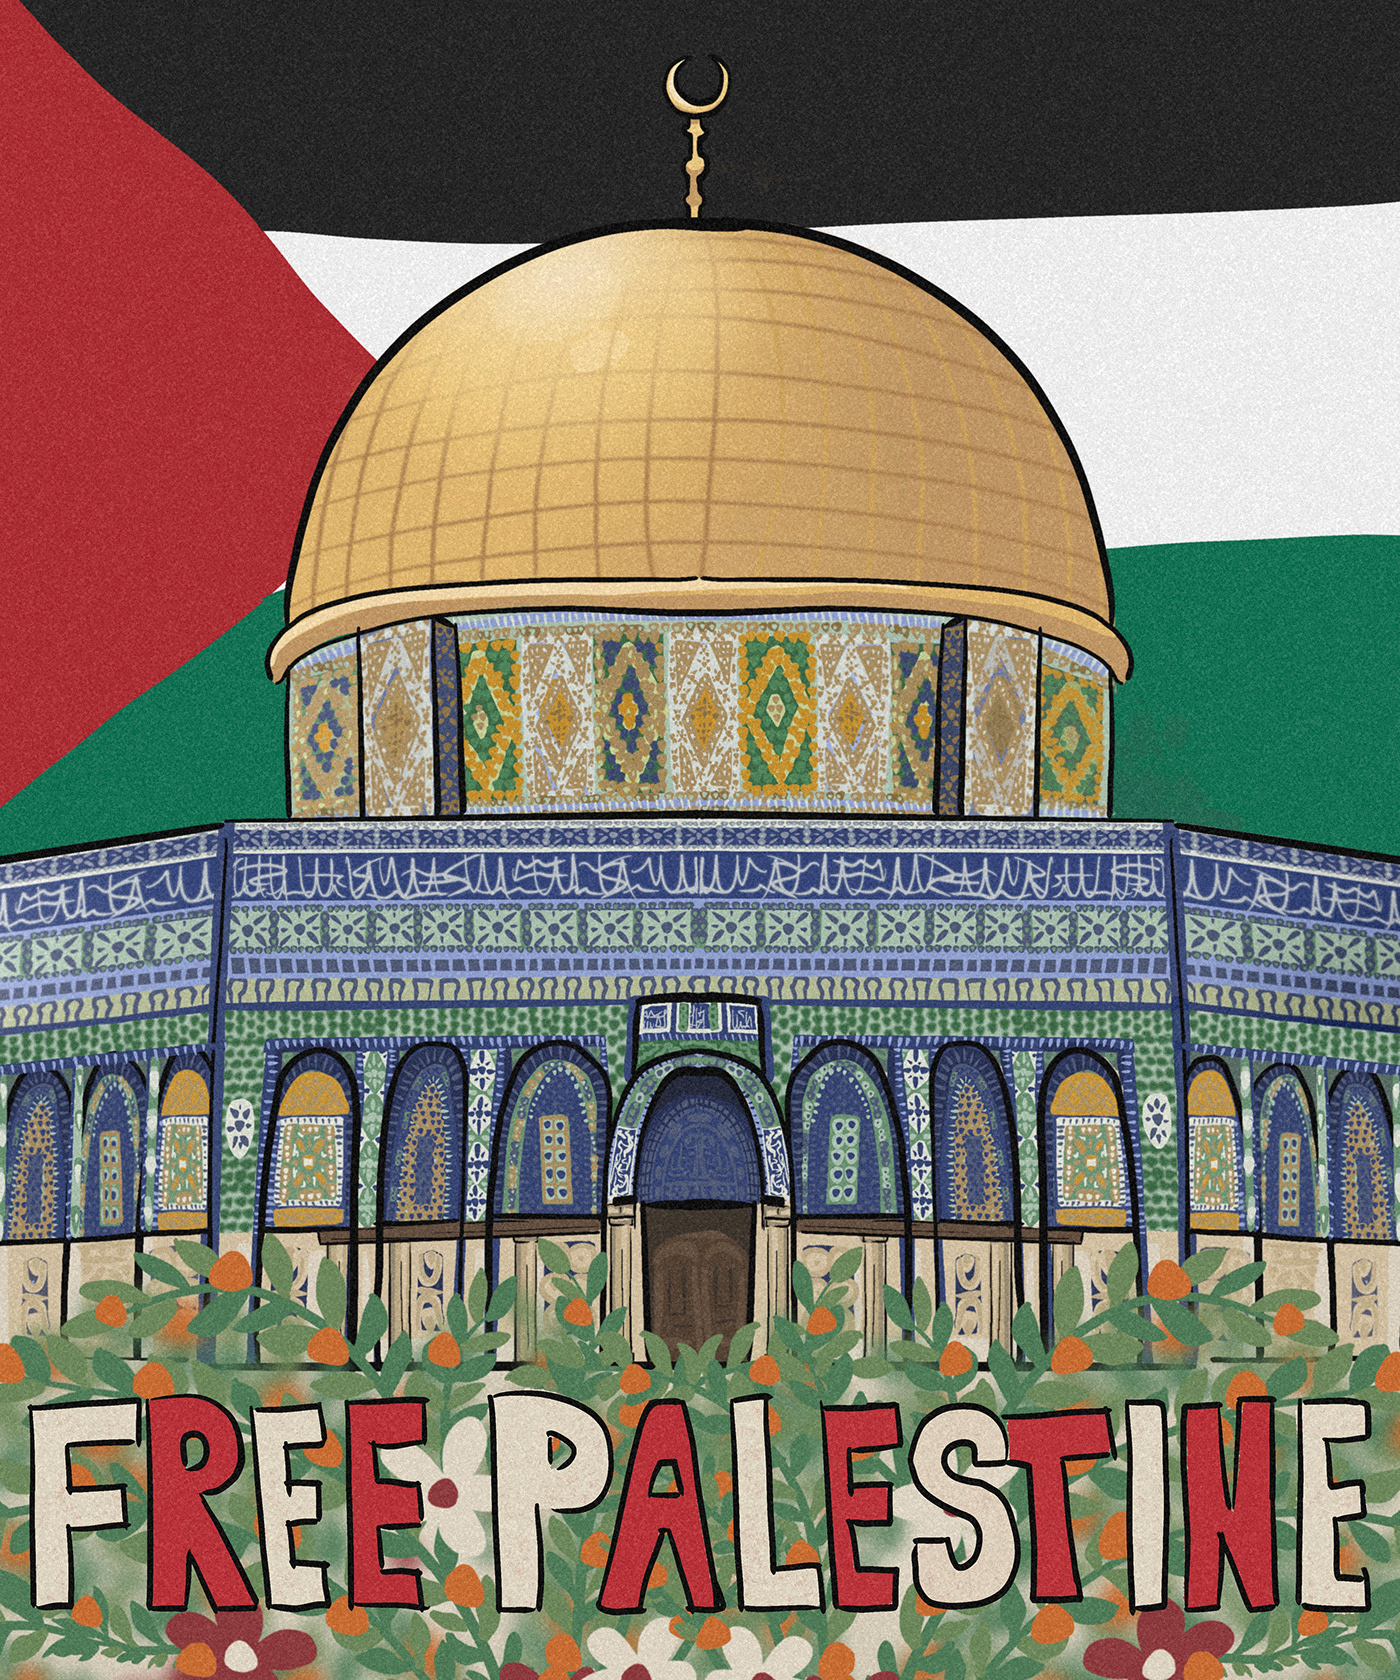 art artist Digital Art  digital illustration FREE PALESTINE  Freedom Art ILLUSTRATION  Illustrator palestine